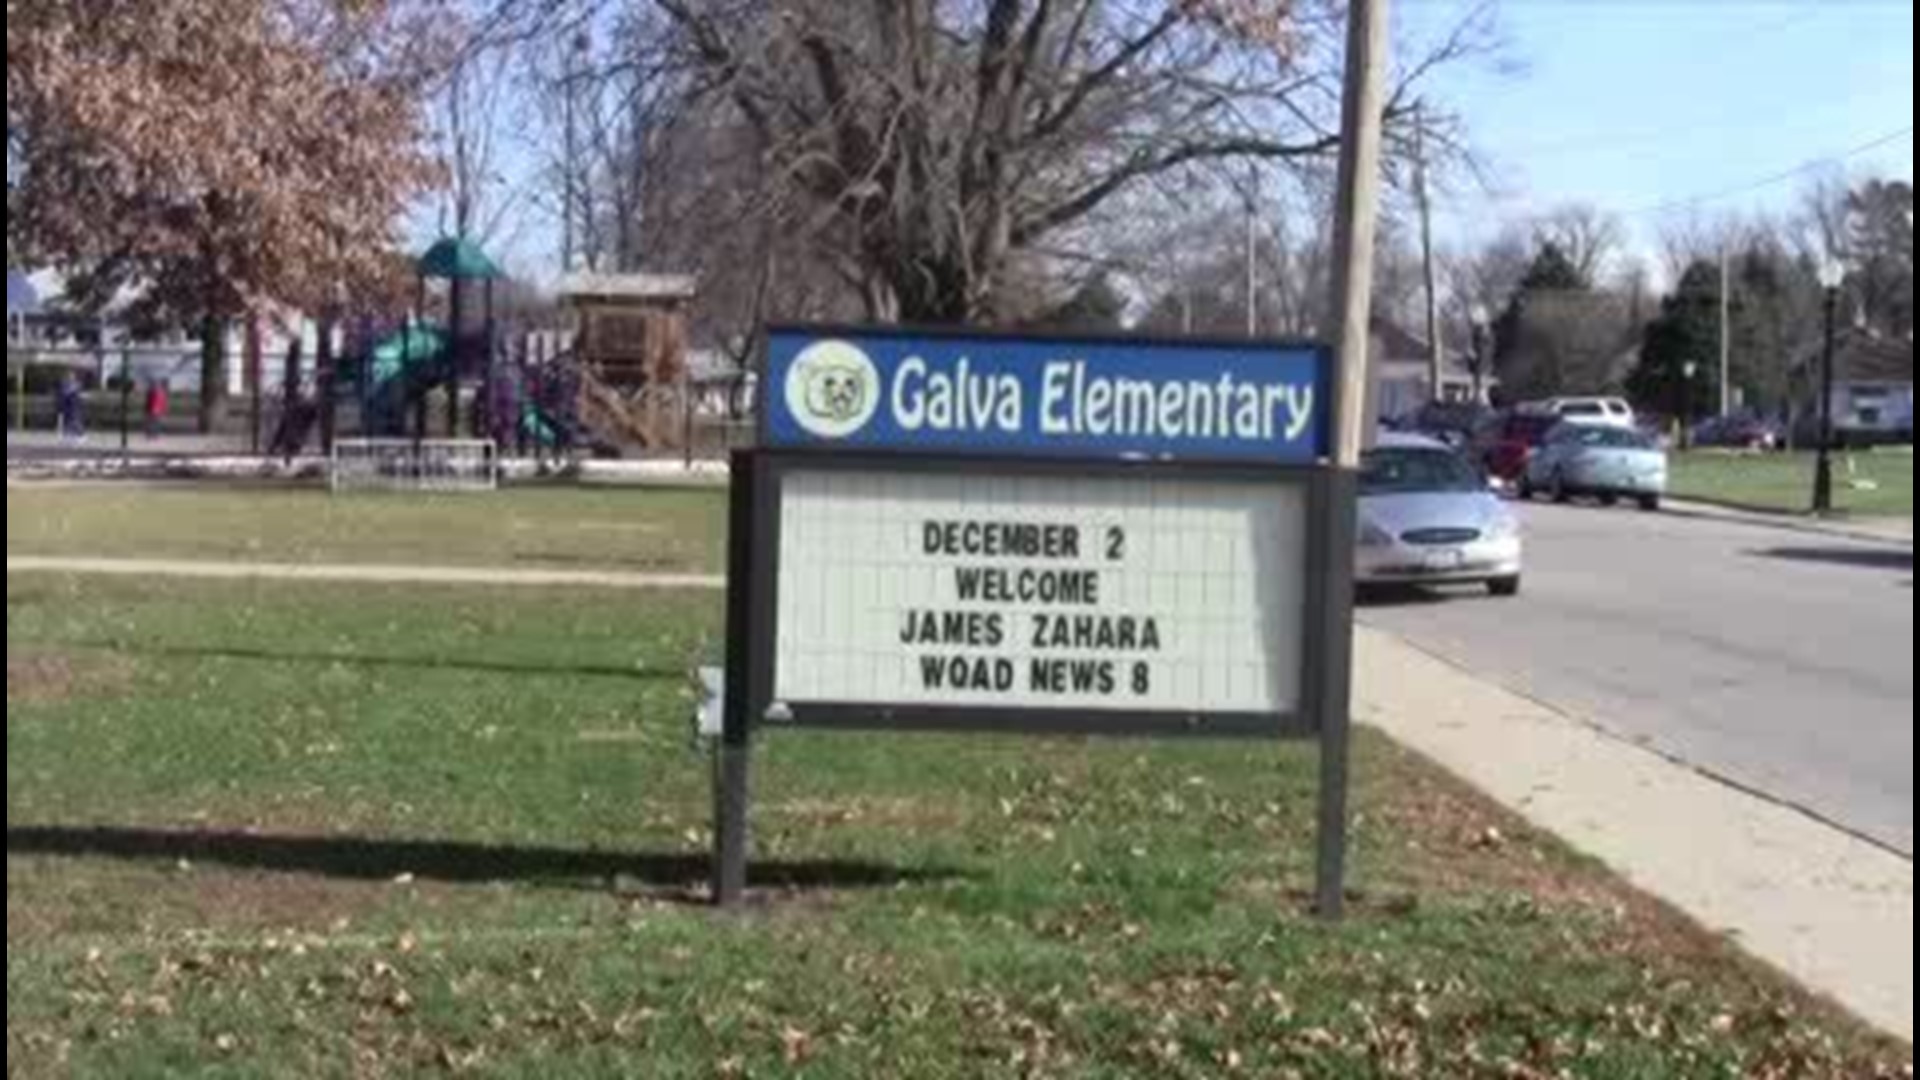 James Visits Galva Elementary